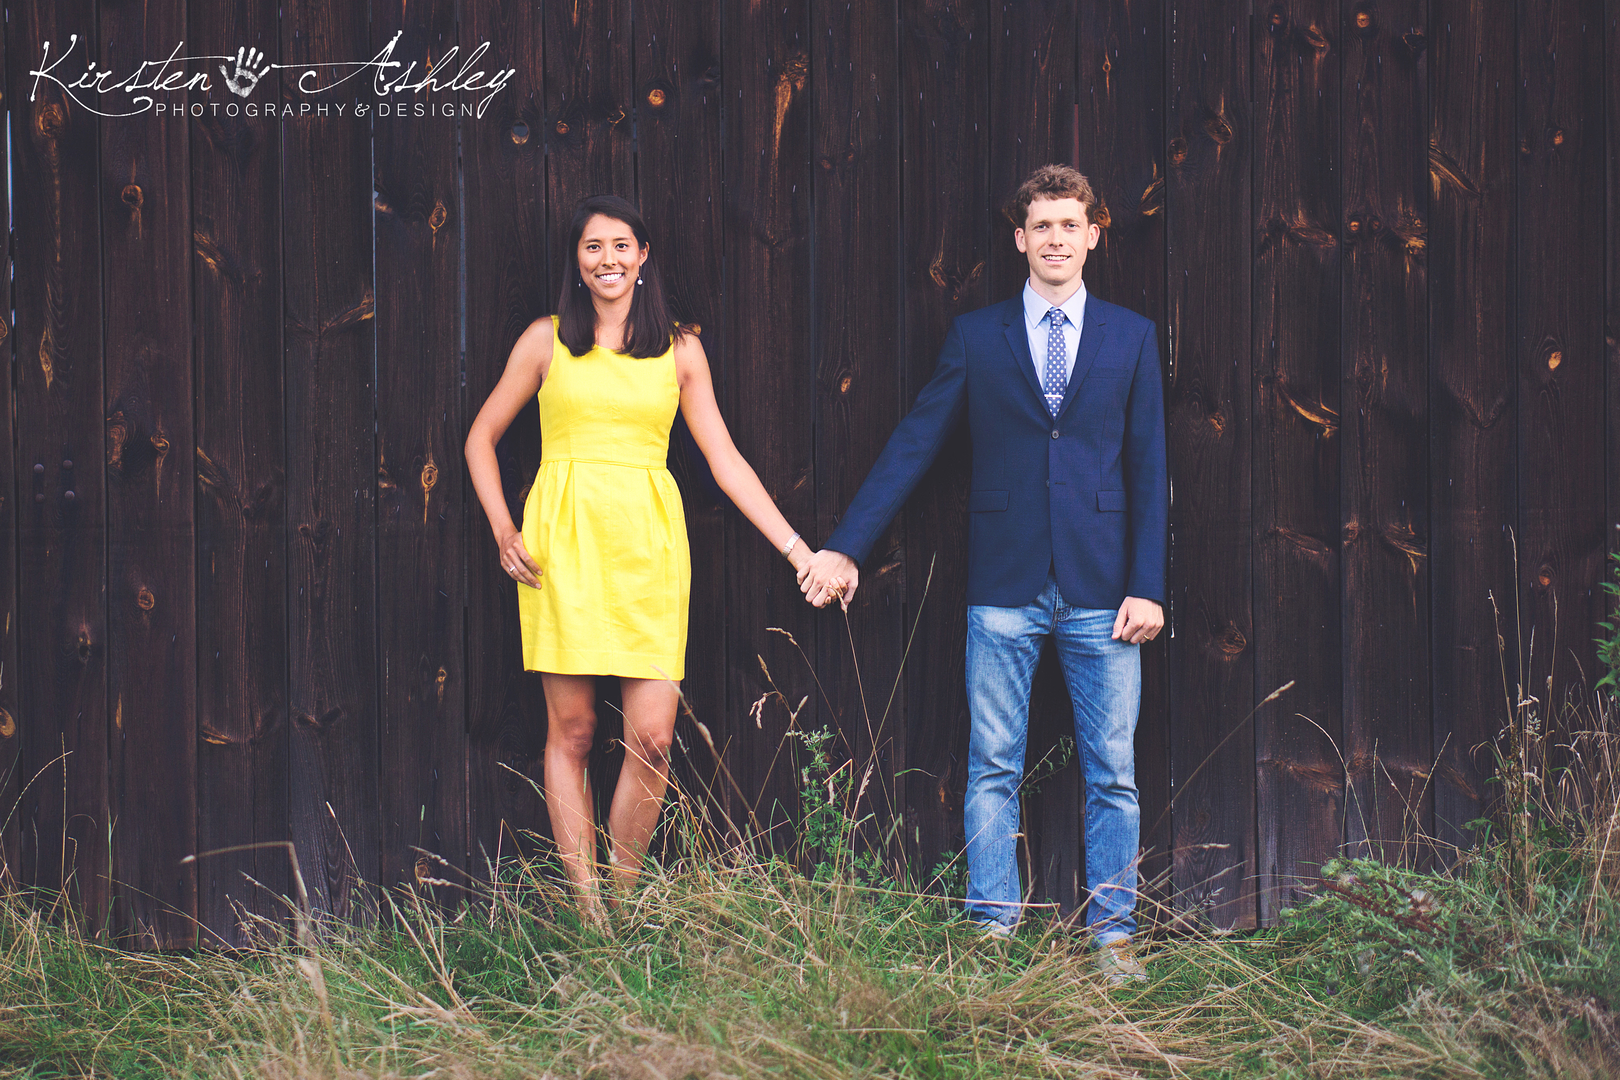 Kirsten Ashley Photography & Design | Landstuhl Couples Photographer